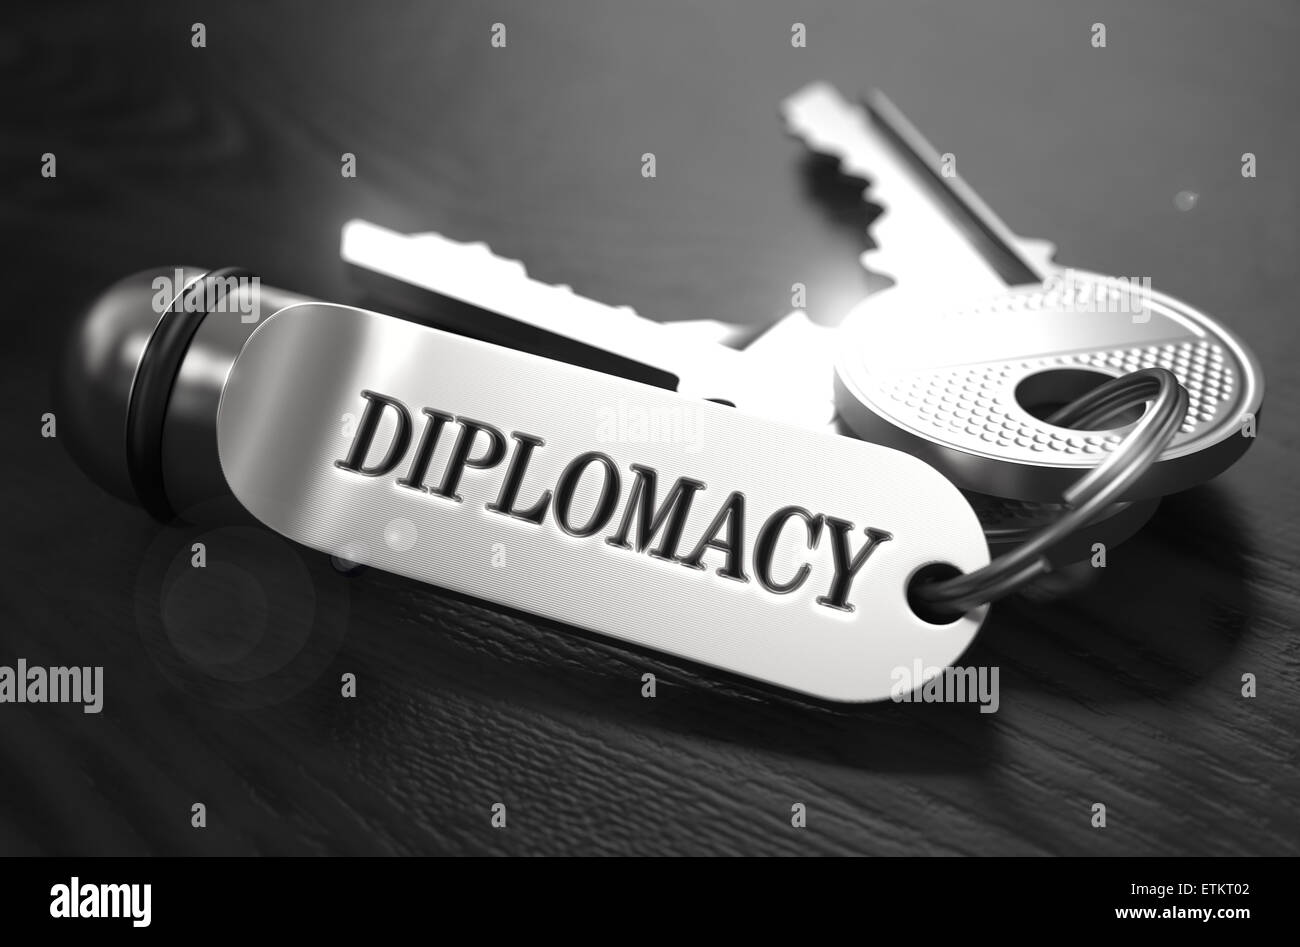 Diplomacy Concept. Keys with Keyring. Stock Photo